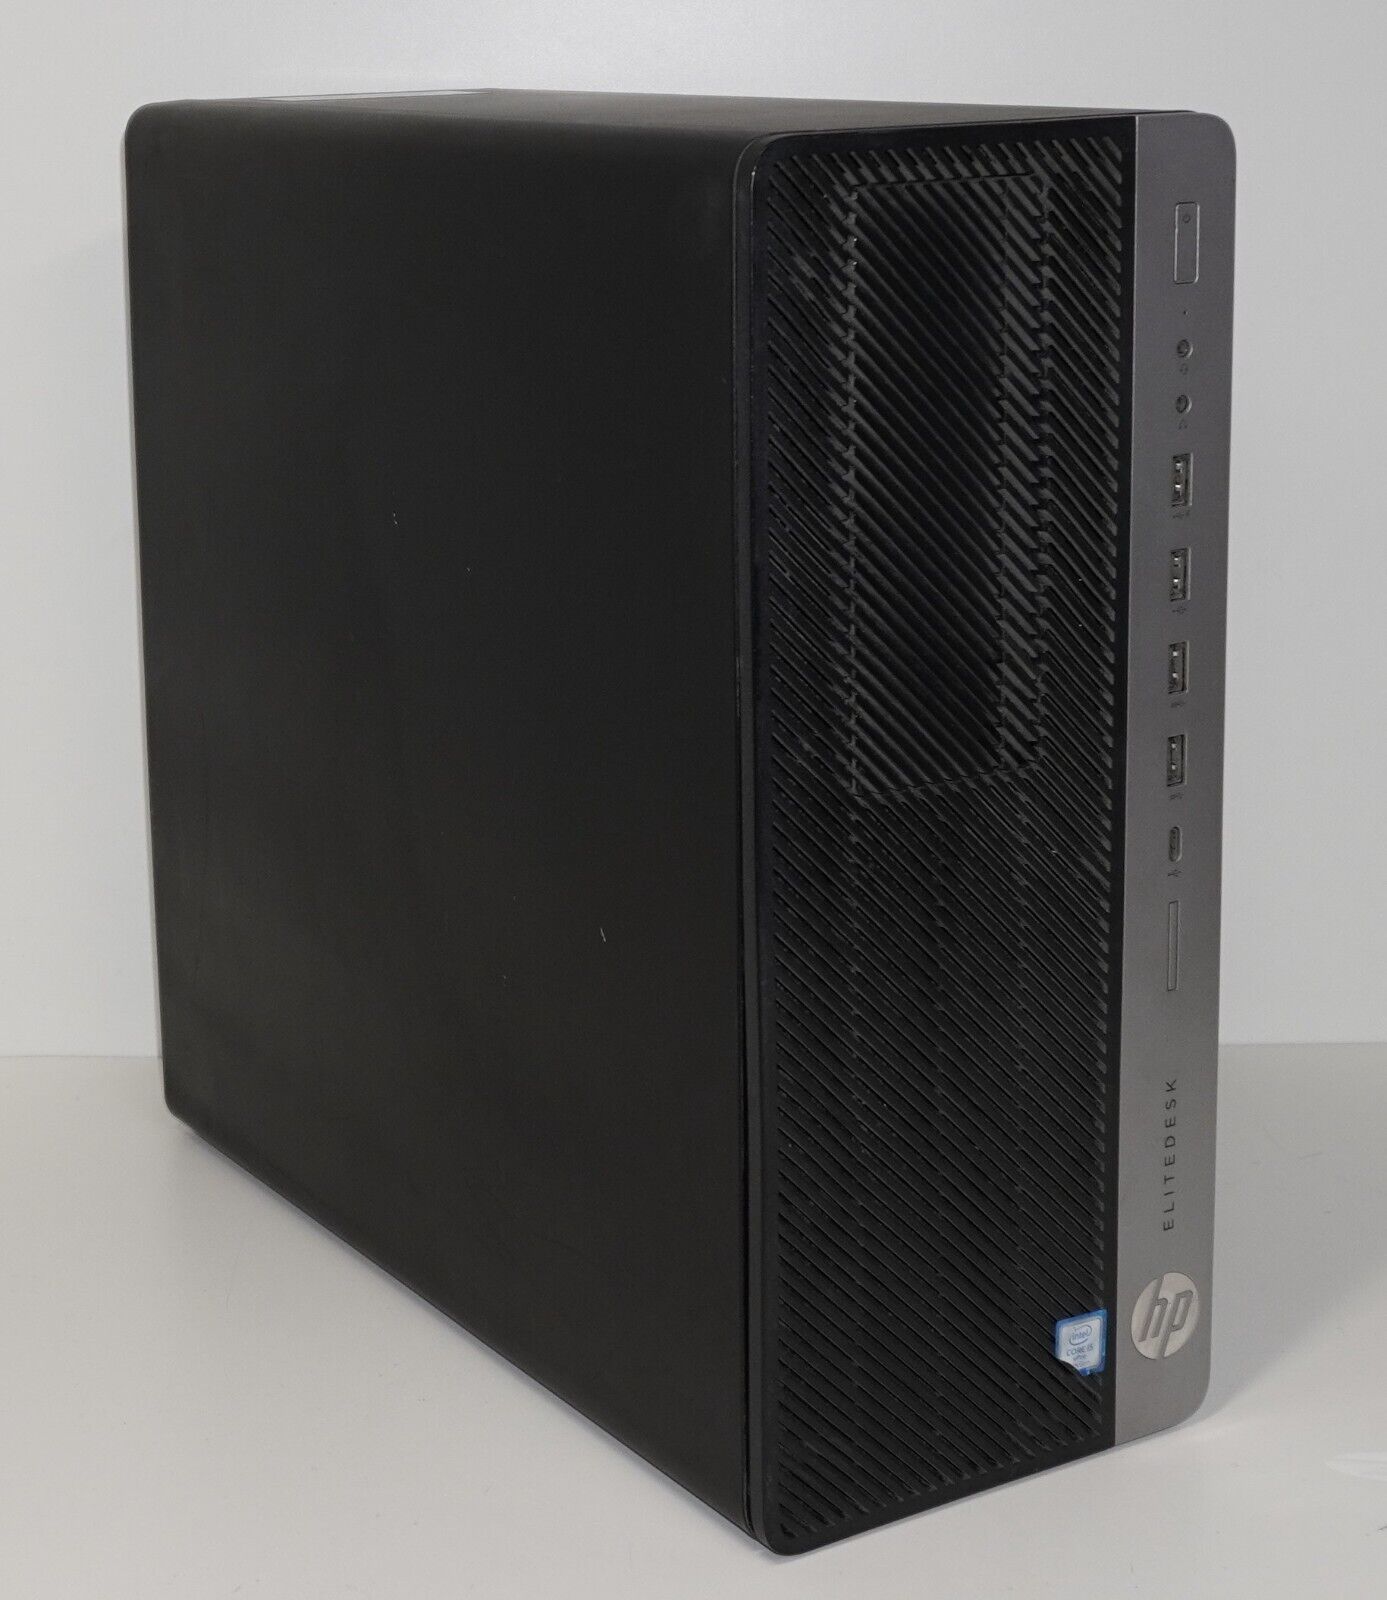 HP EliteDesk 800 G4 SFF i5-8500 8gb 500gb hard drive